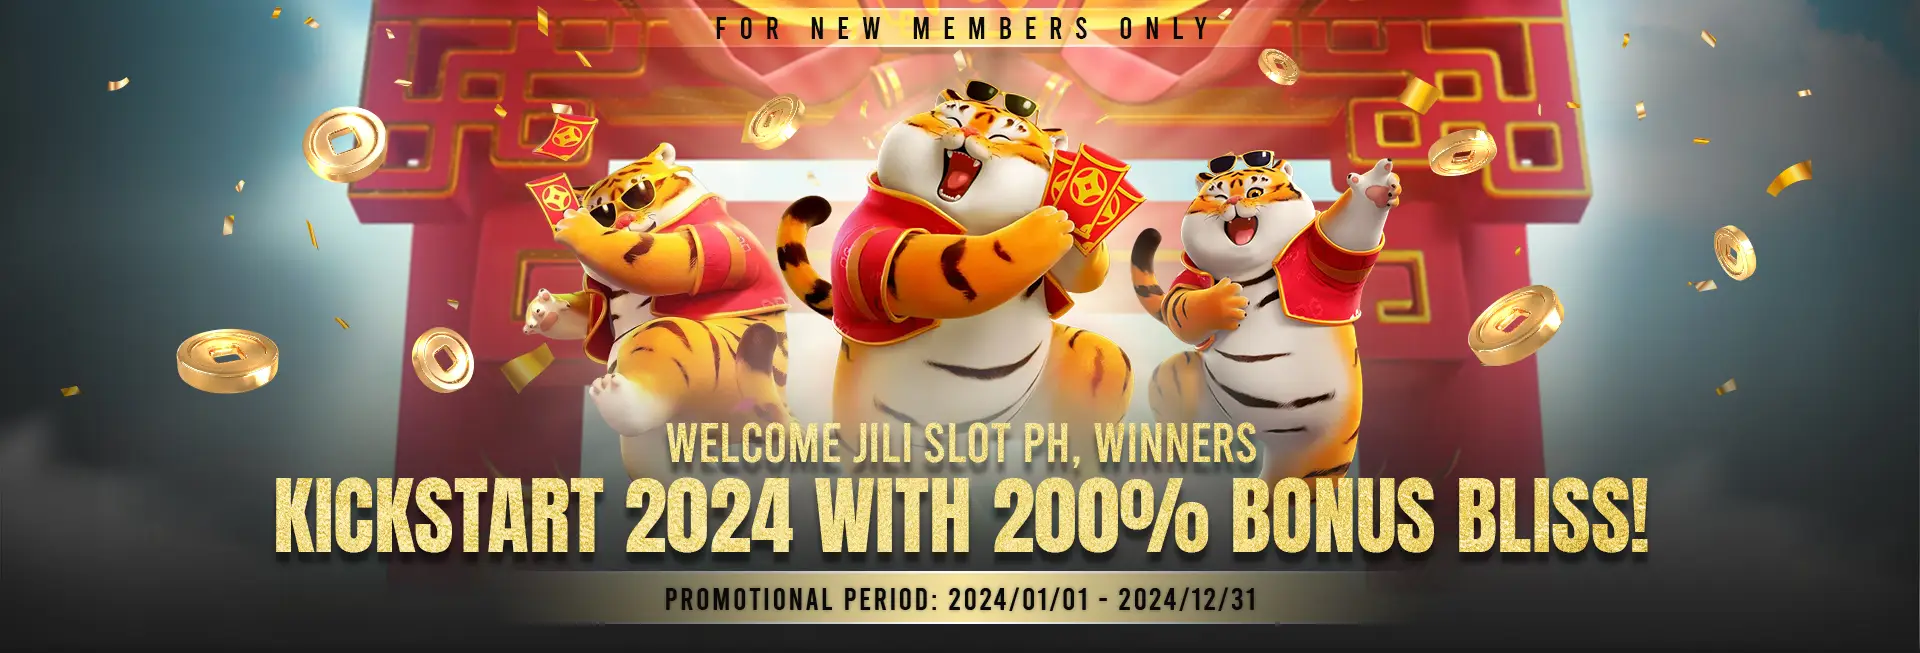 Jili Slot PH new member welcome bonus